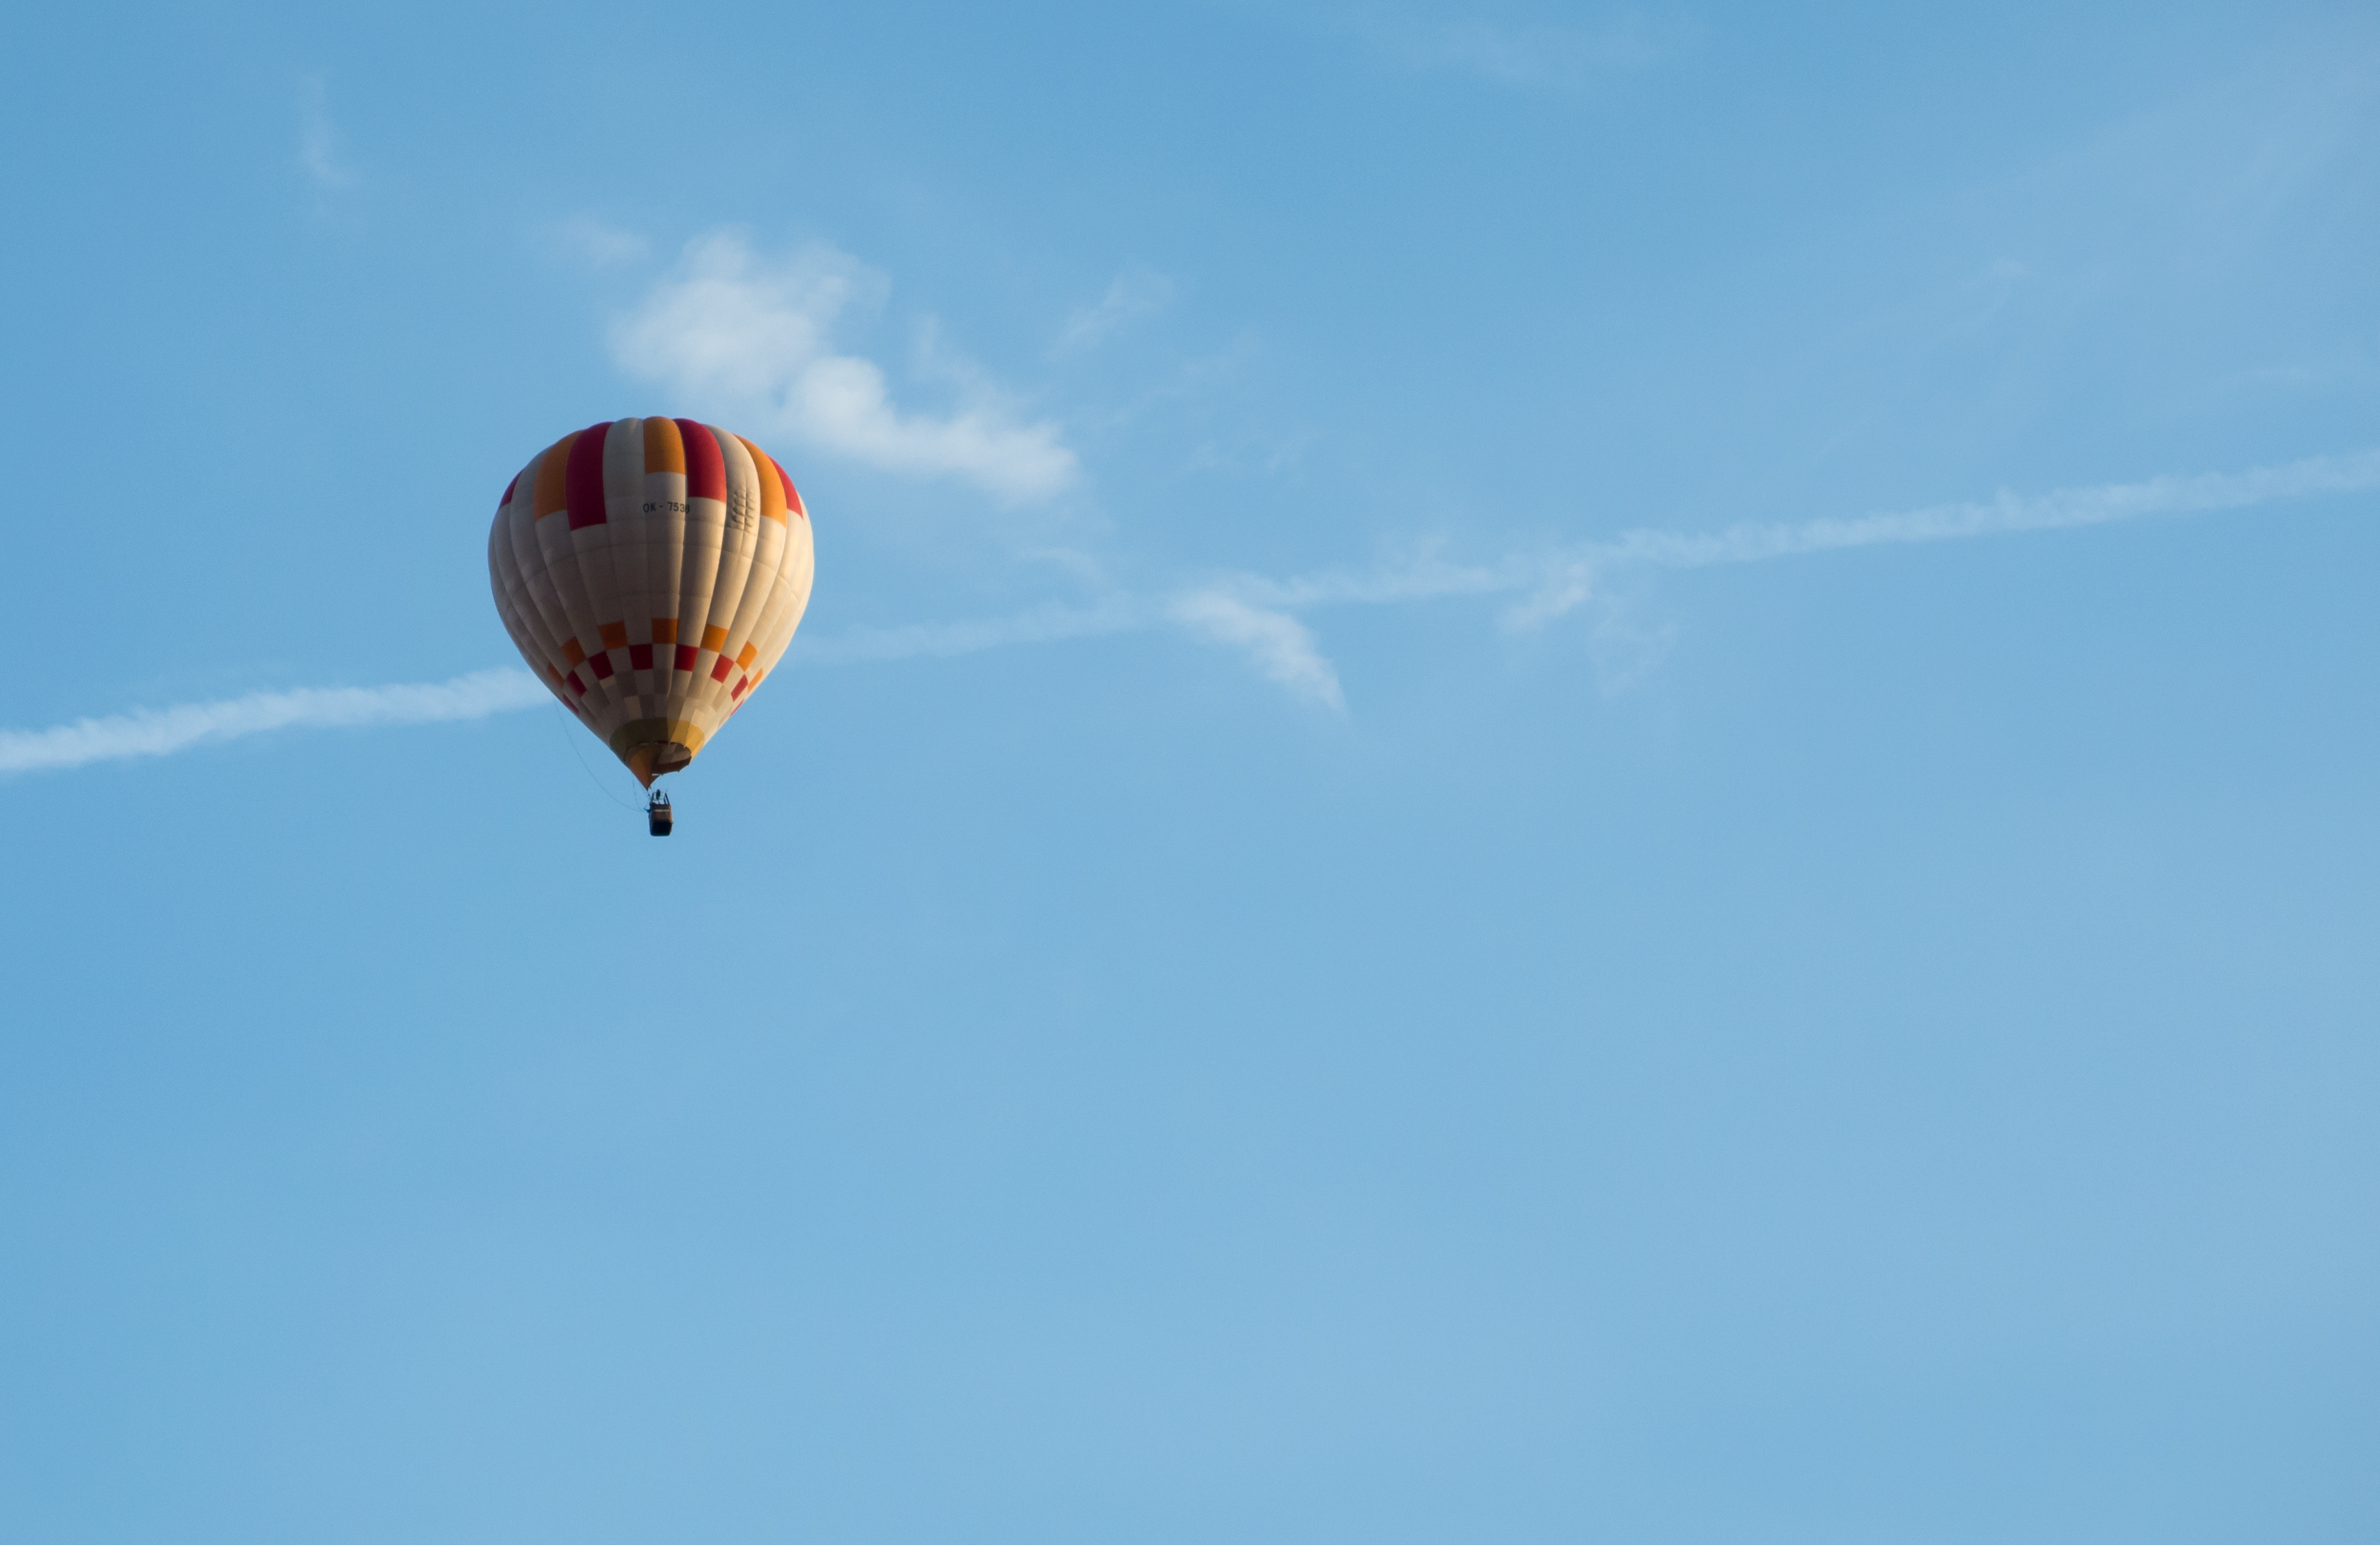 Free Image: Hot Air Balloon | Libreshot Public Domain Photos